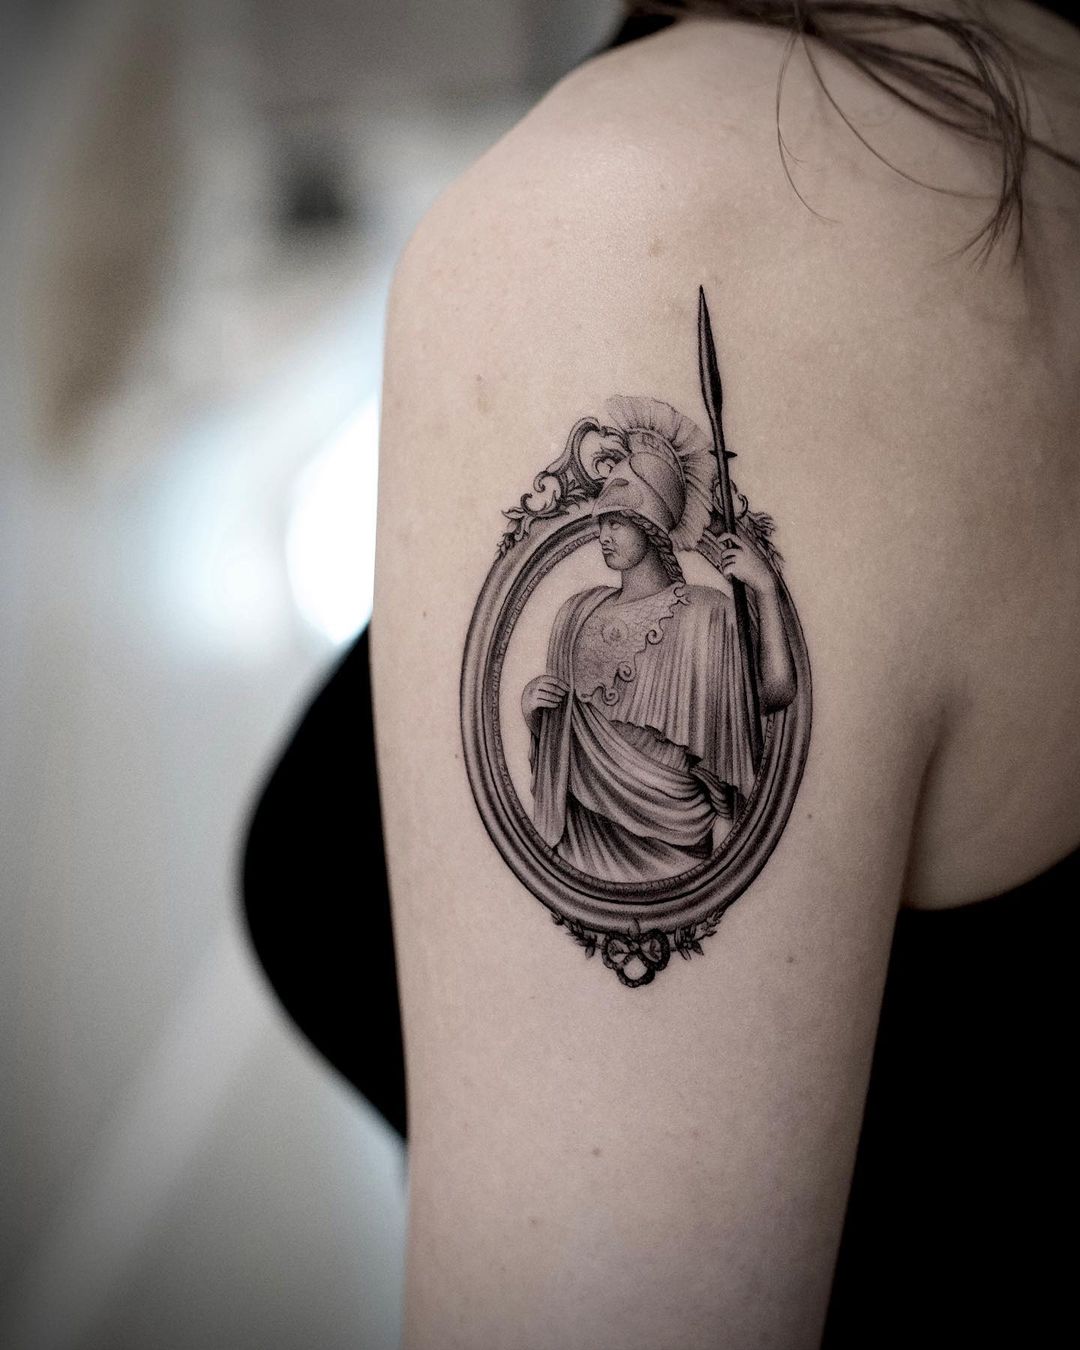 Athena tattoo meaning and symbolism - MyTatouage.com